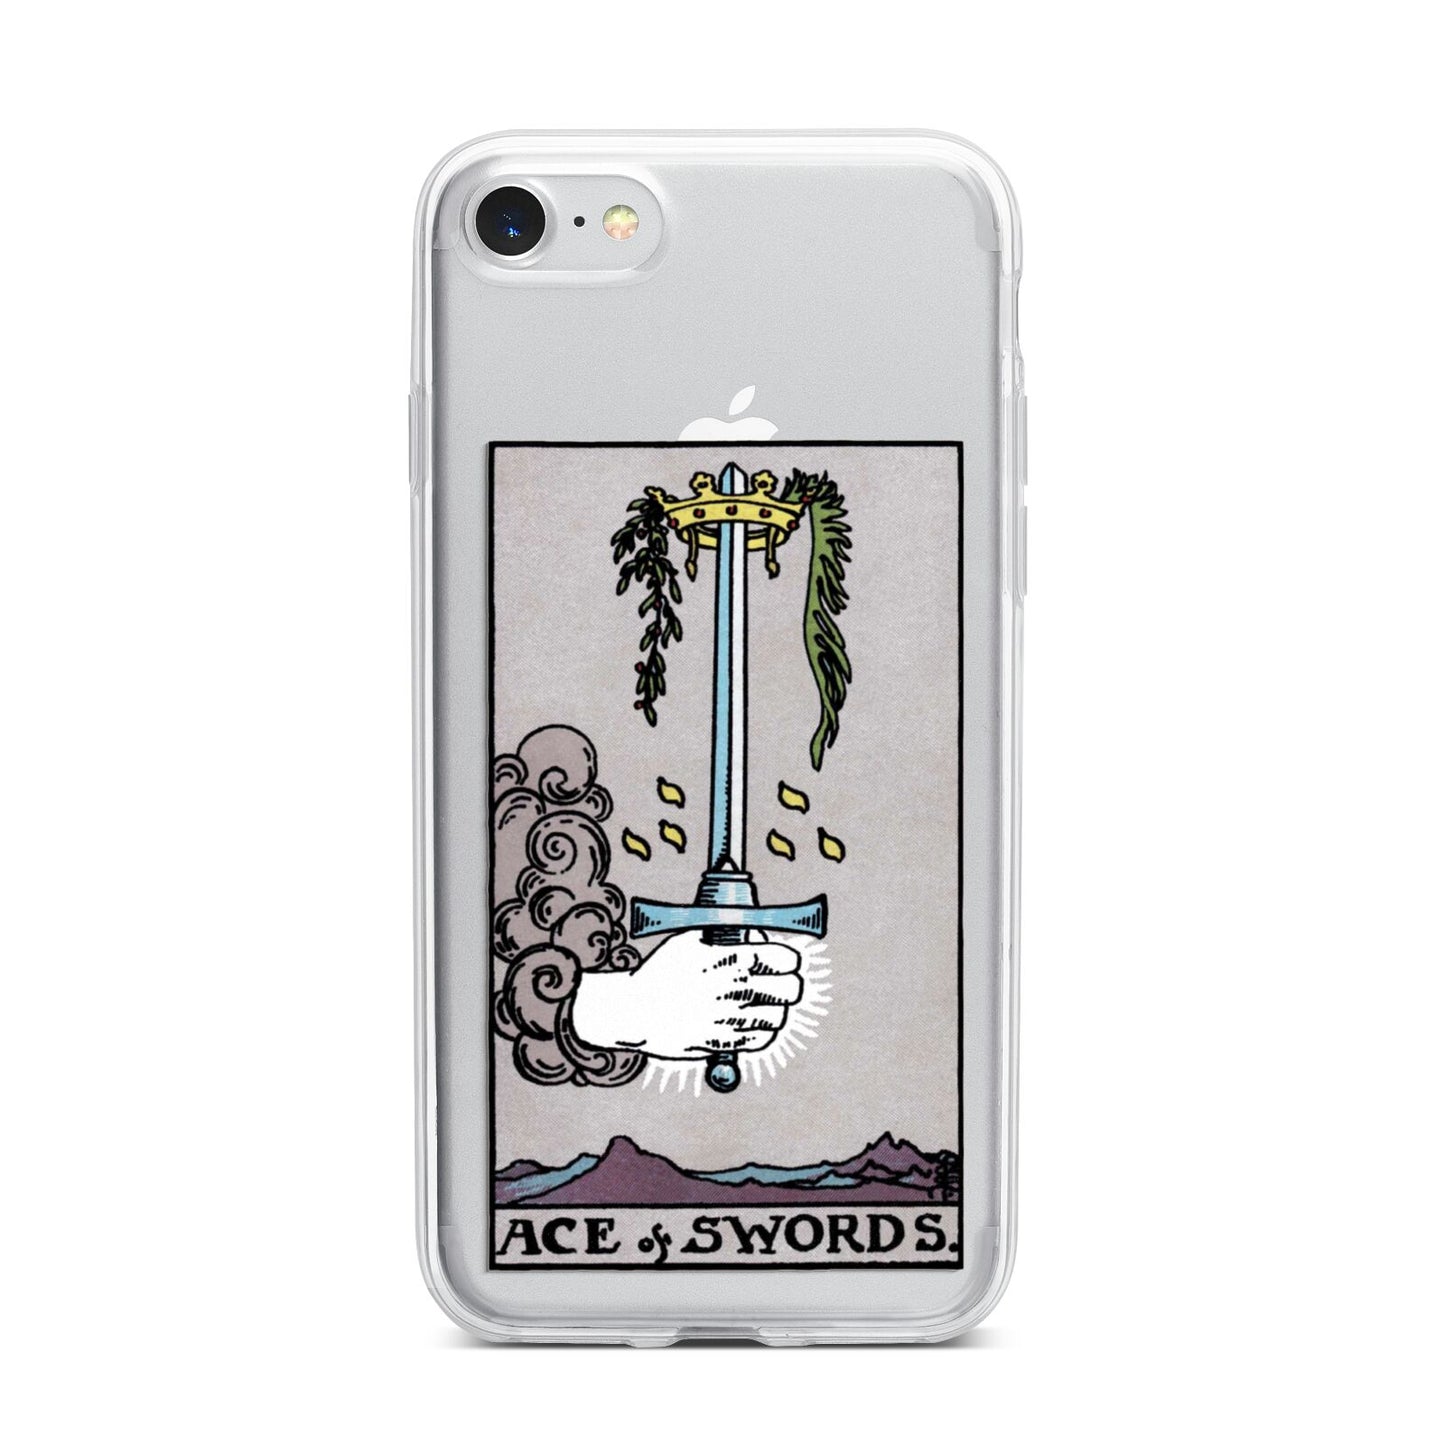 Ace of Swords Tarot Card iPhone 7 Bumper Case on Silver iPhone